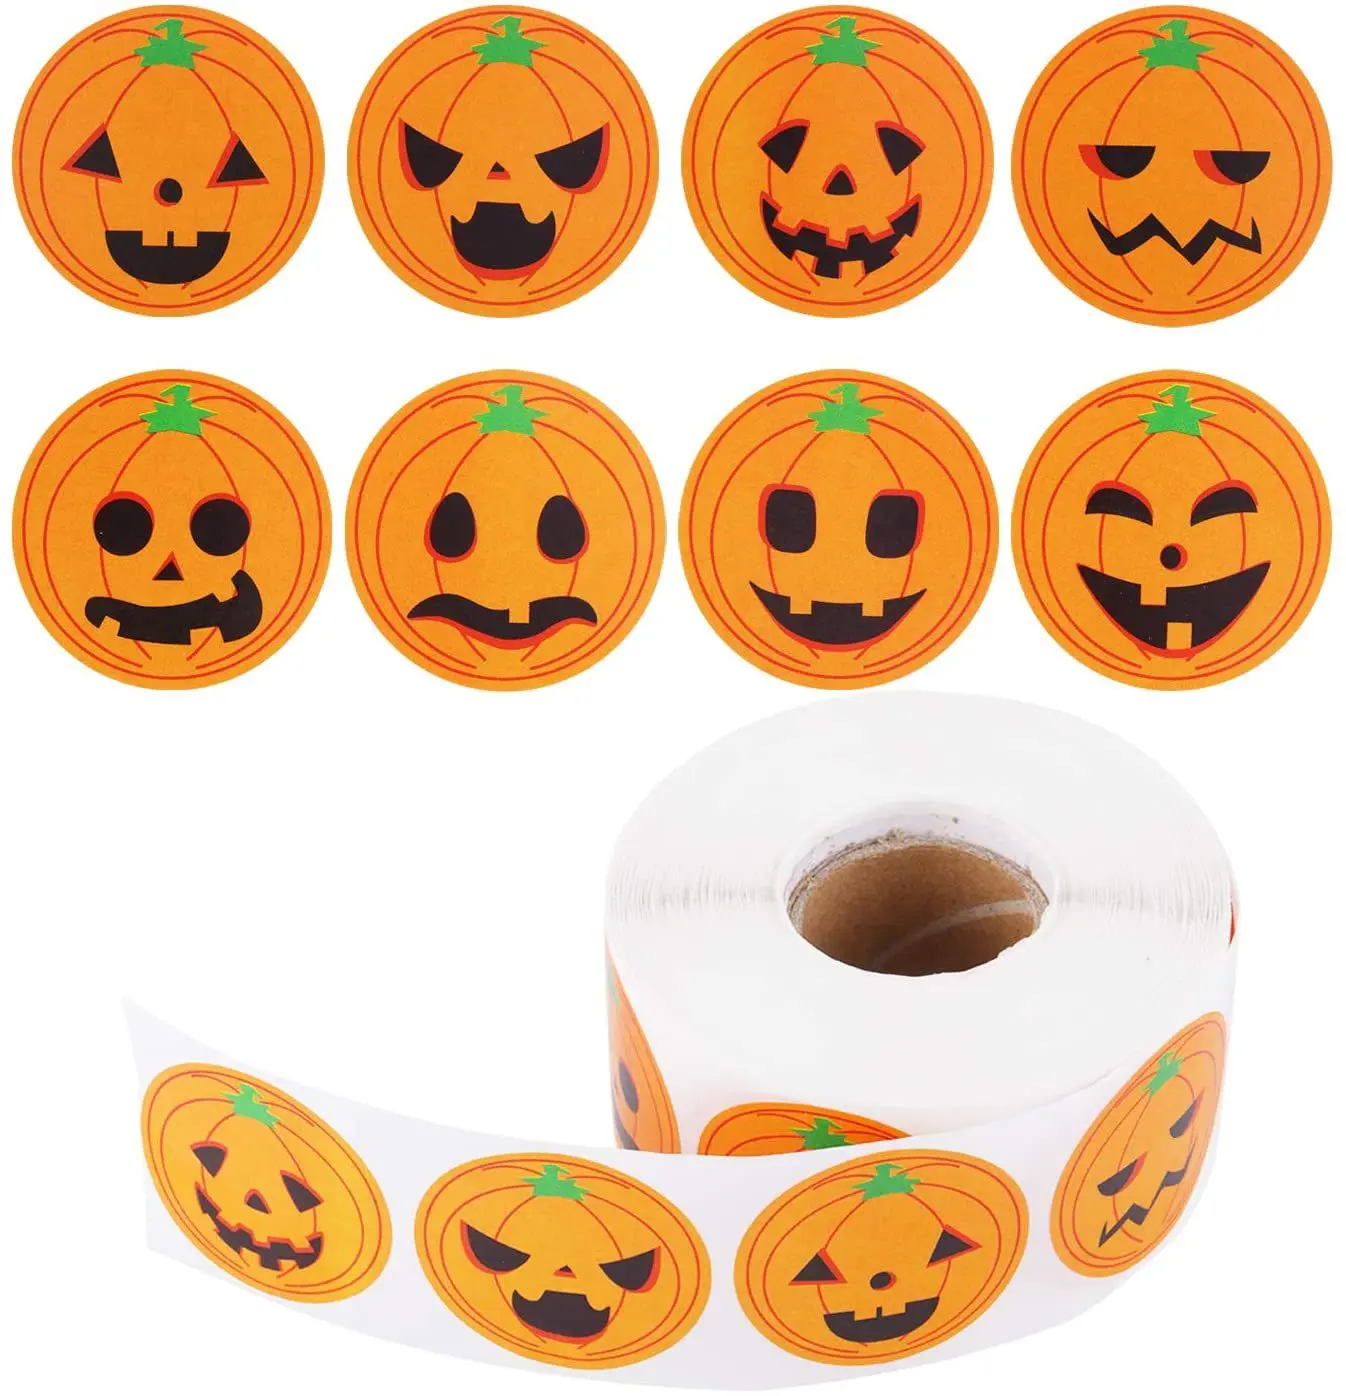 

500pcs Round Halloween Label Stickers Cute Smile Pumpkin Seal Sticker DIY Decorative Labels Halloween Party Favors Supplies